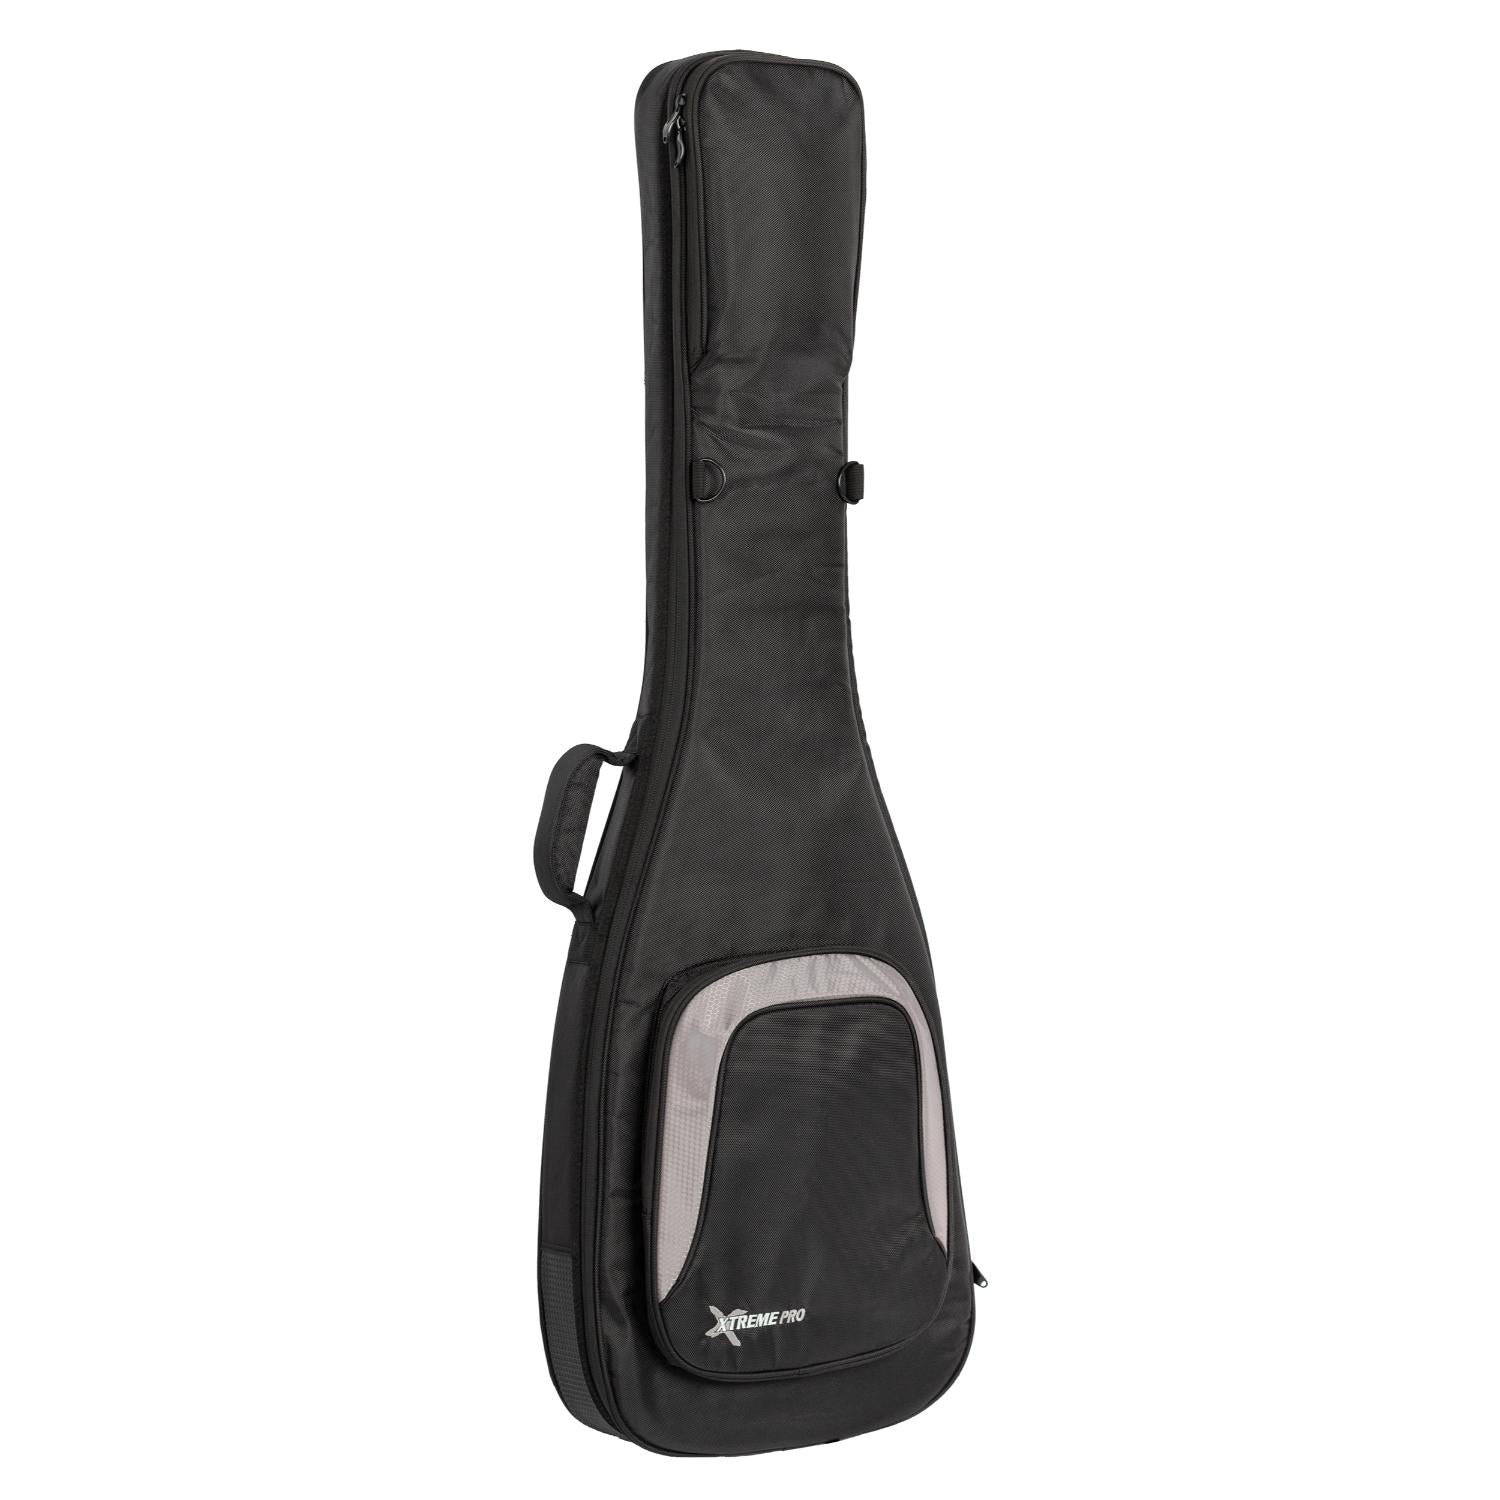 Xtreme Pro Premium Deluxe Bass Guitar Bag